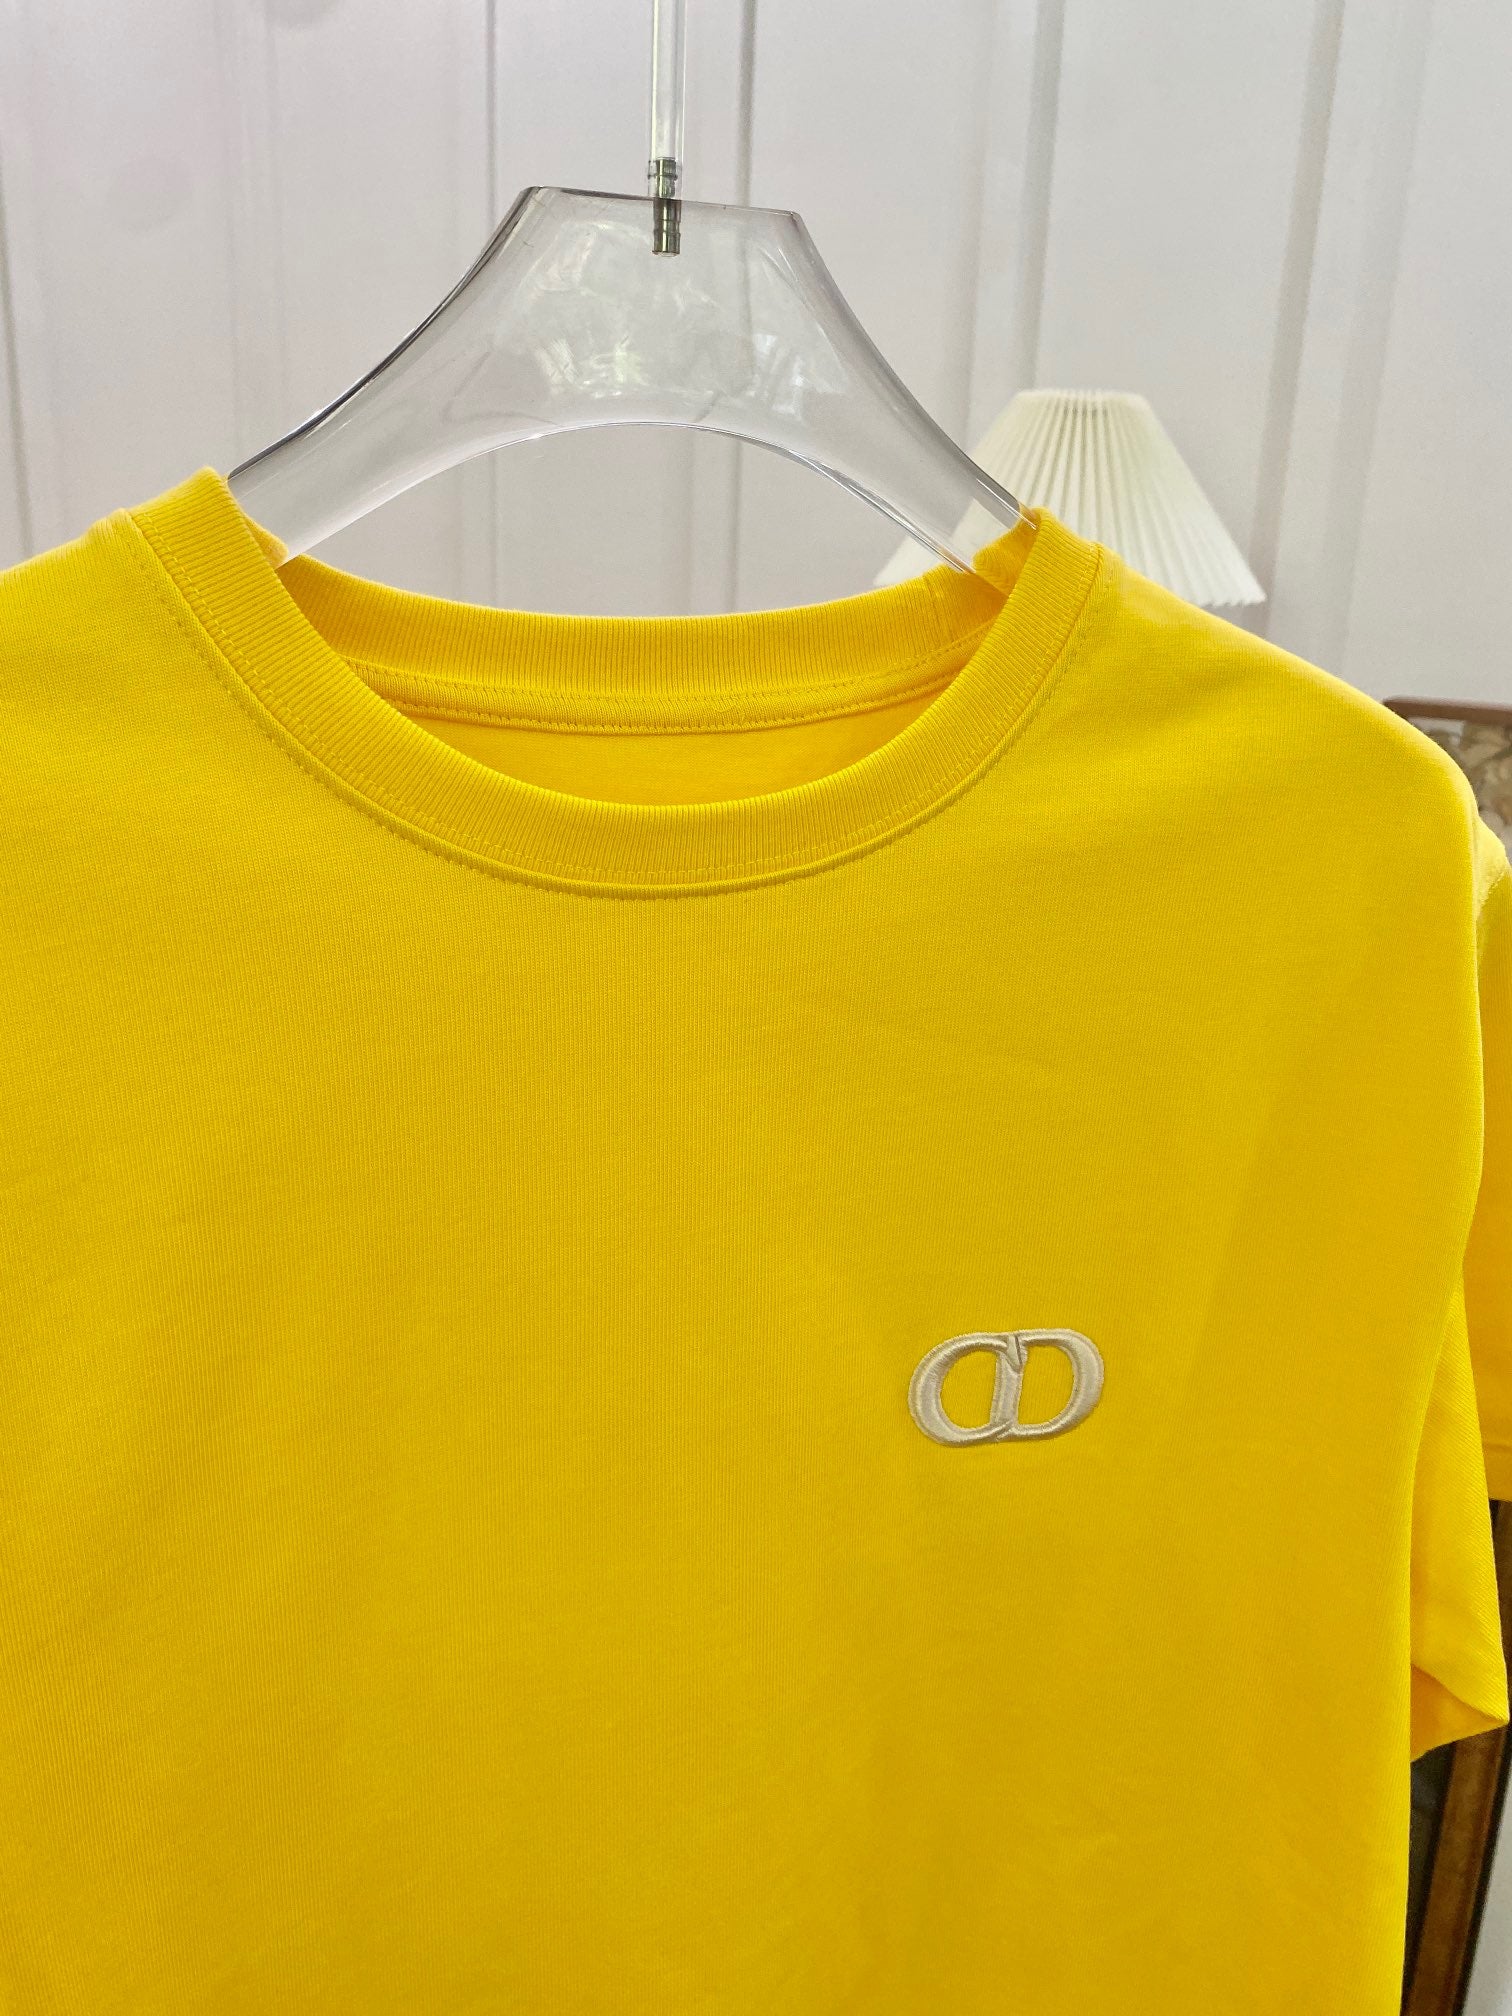 Black, Yellow T-Shirt - Size M